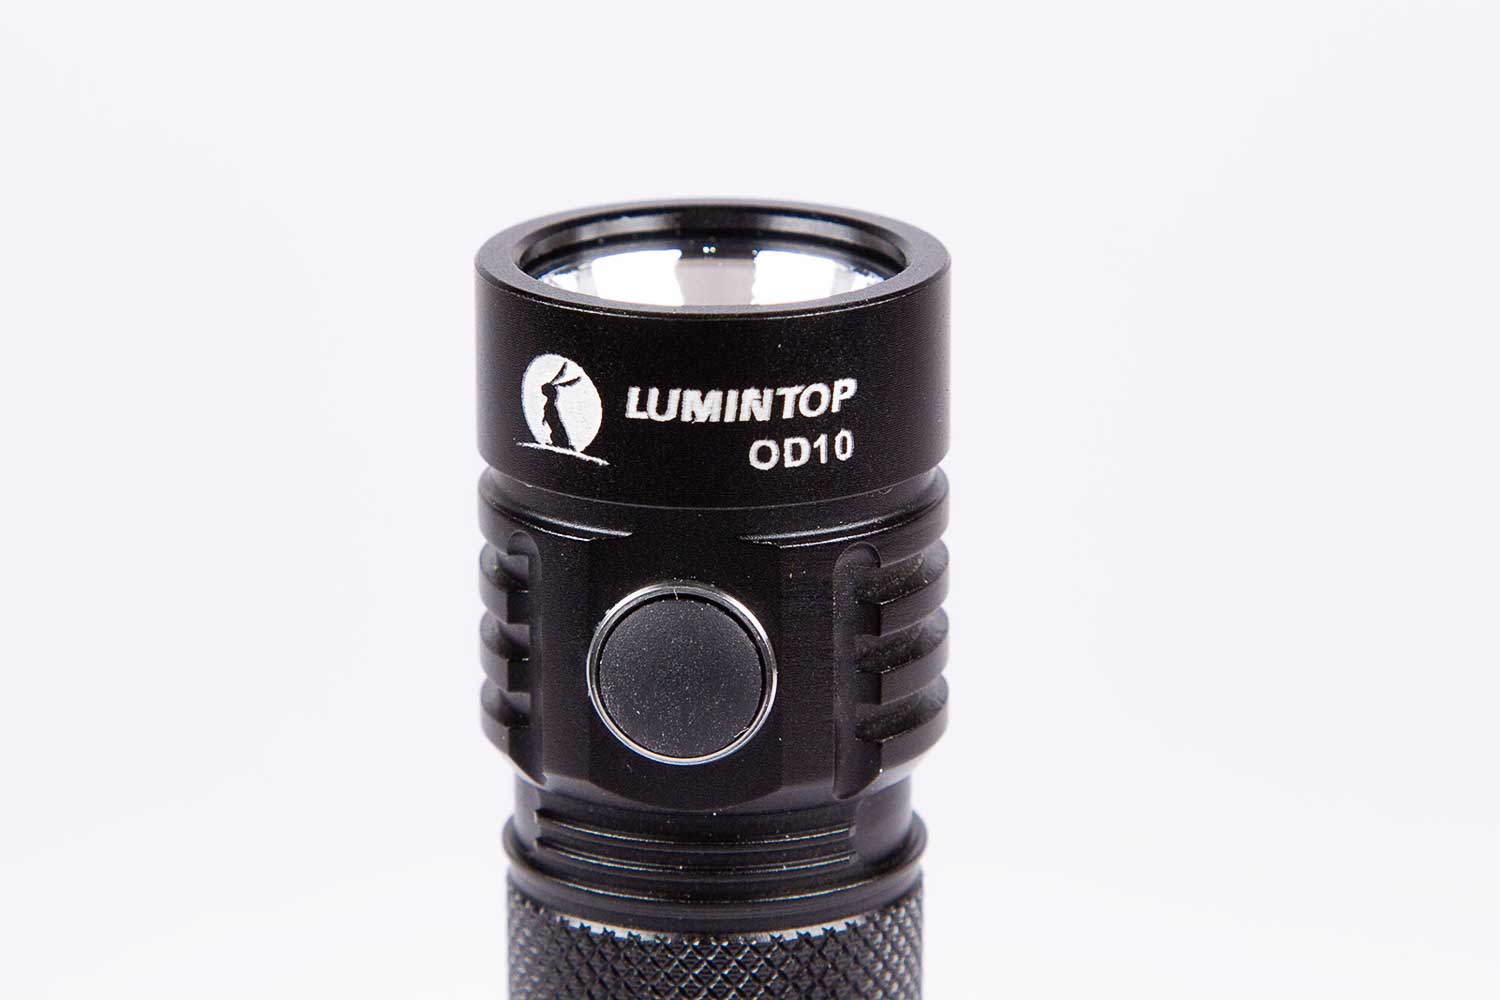 Lumintop OD10 bezel and logo